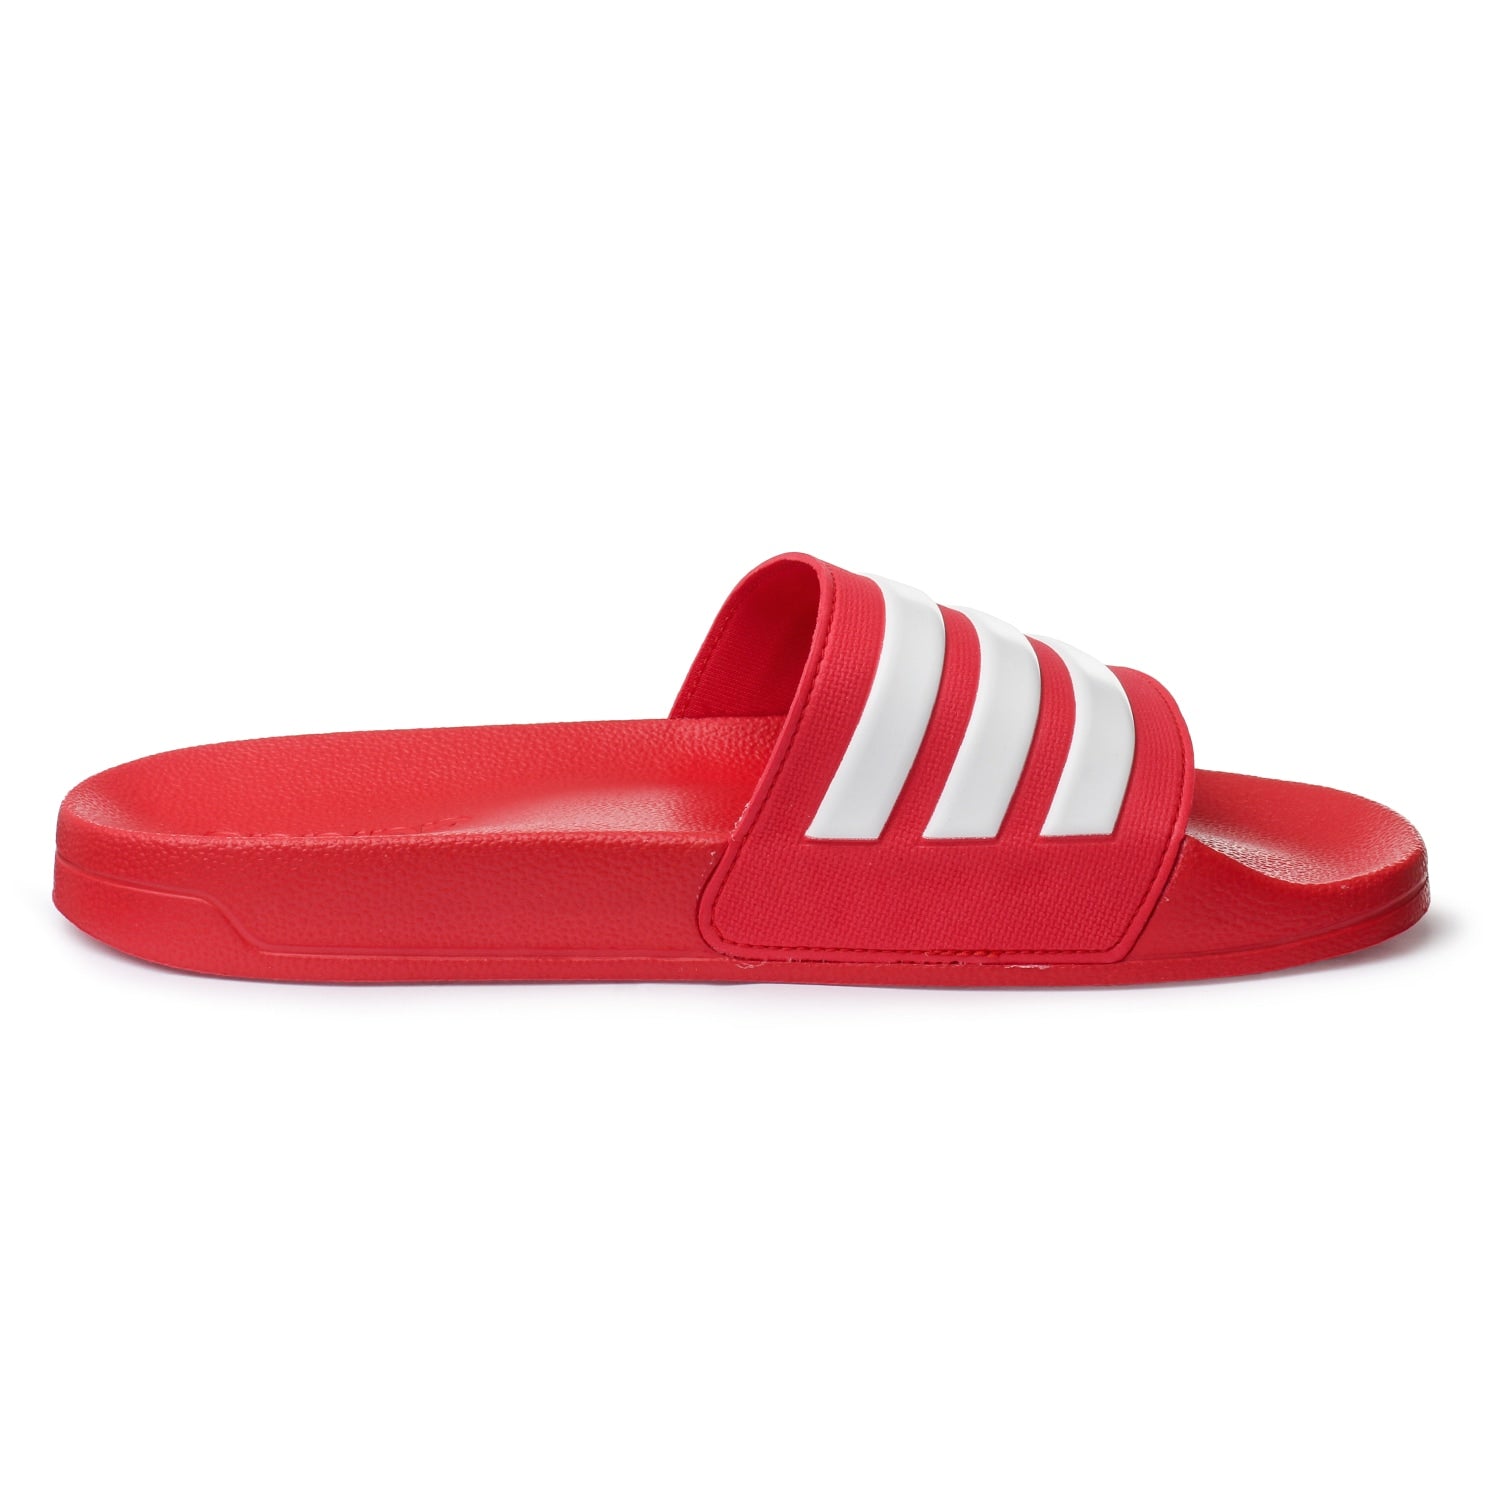 Sandalias Adilette Shower - AQ1705 - Rojo - Unisex | Shoelander.com - Footwear Retail